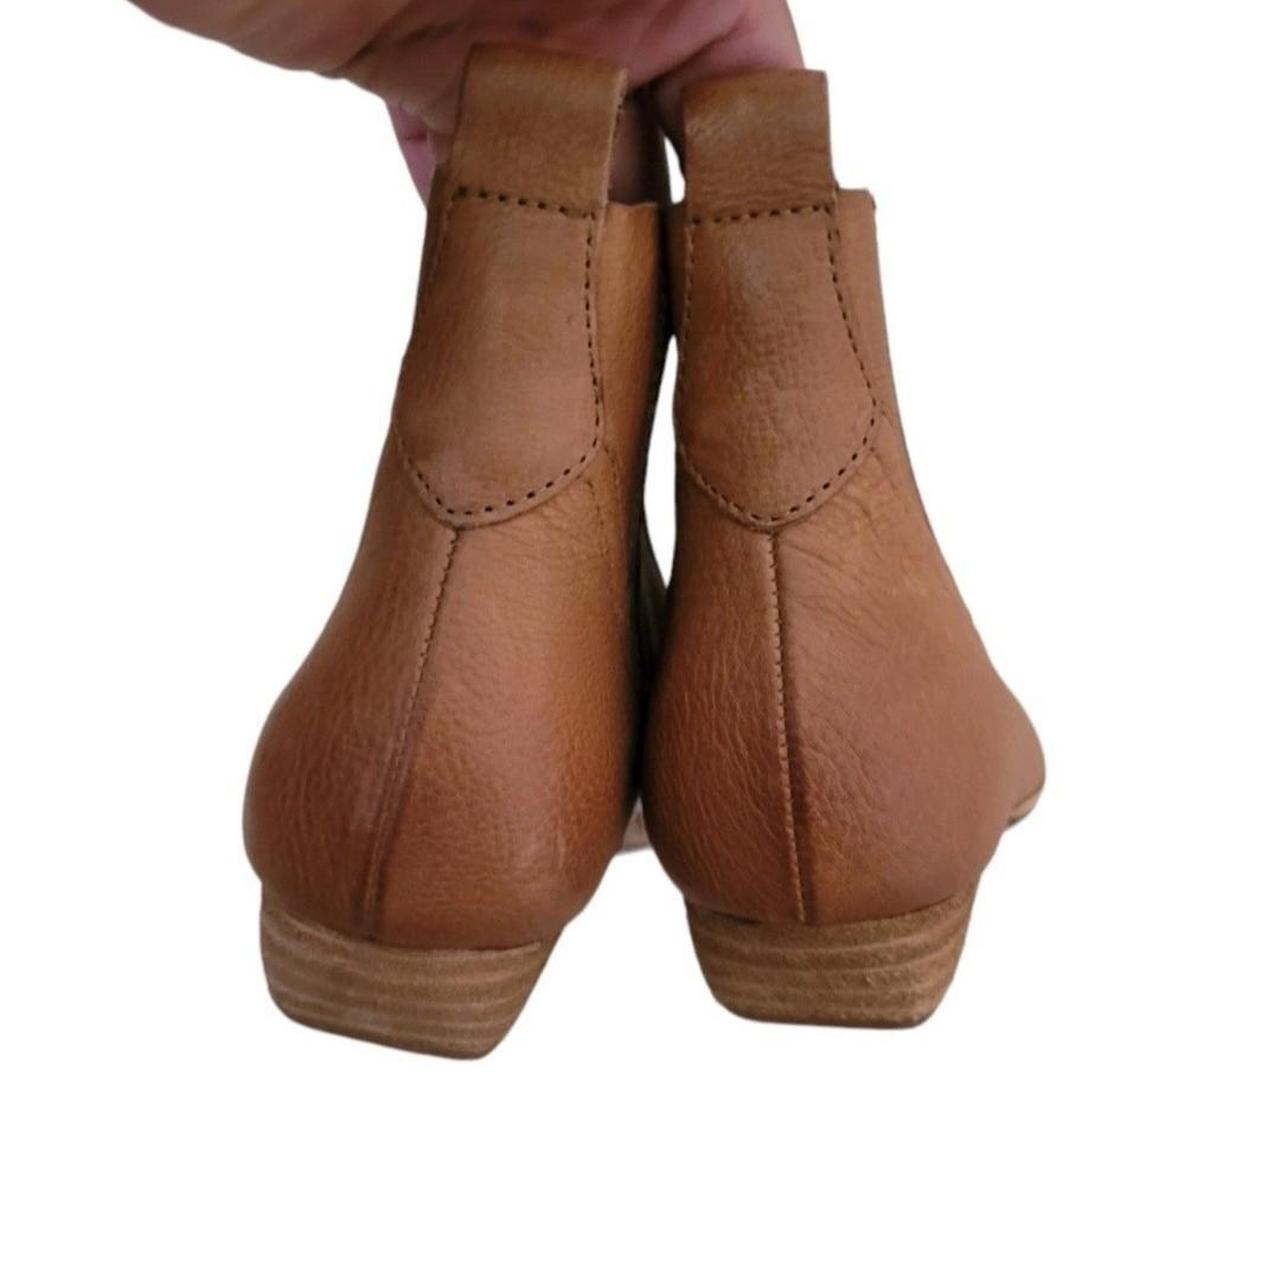 Korks Women's Boots (5)